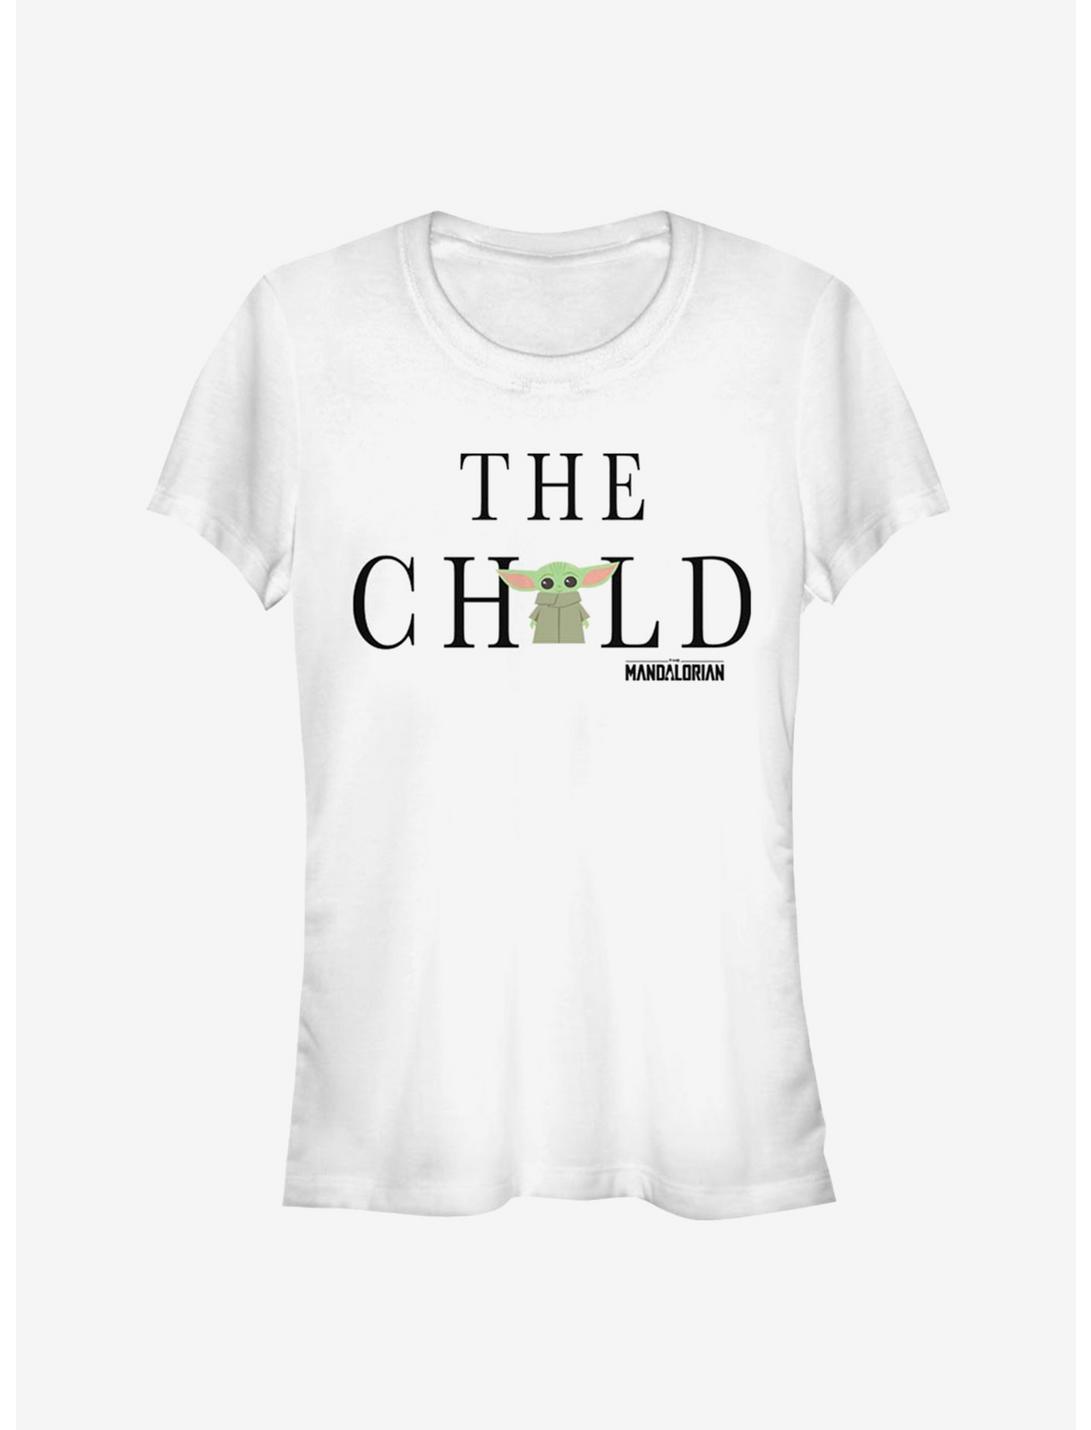 Star Wars The Mandalorian The Child Text Girls T-Shirt, WHITE, hi-res